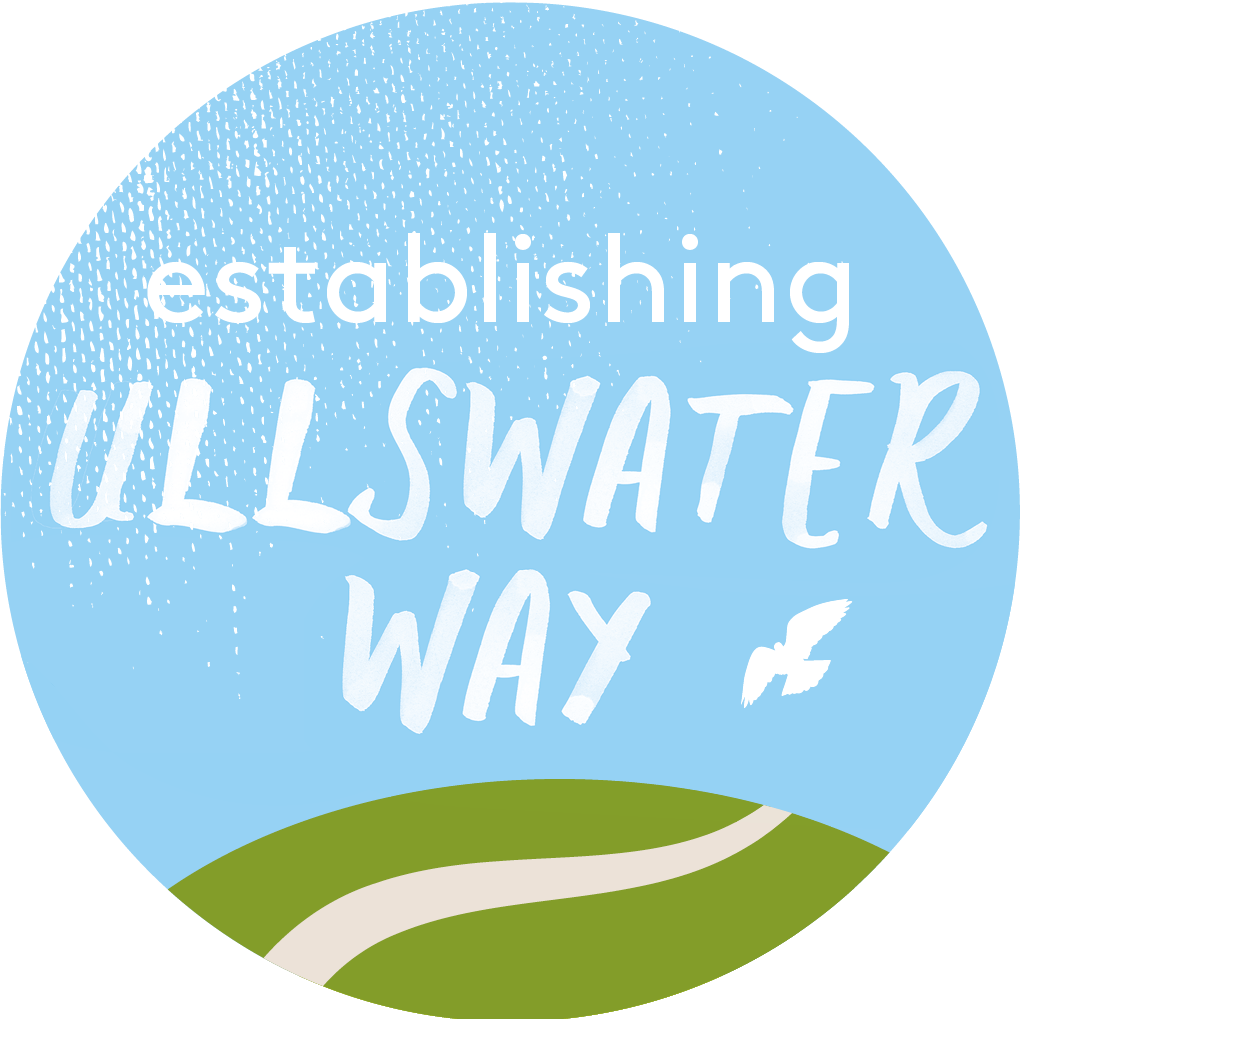 Establishing Ullswater Way